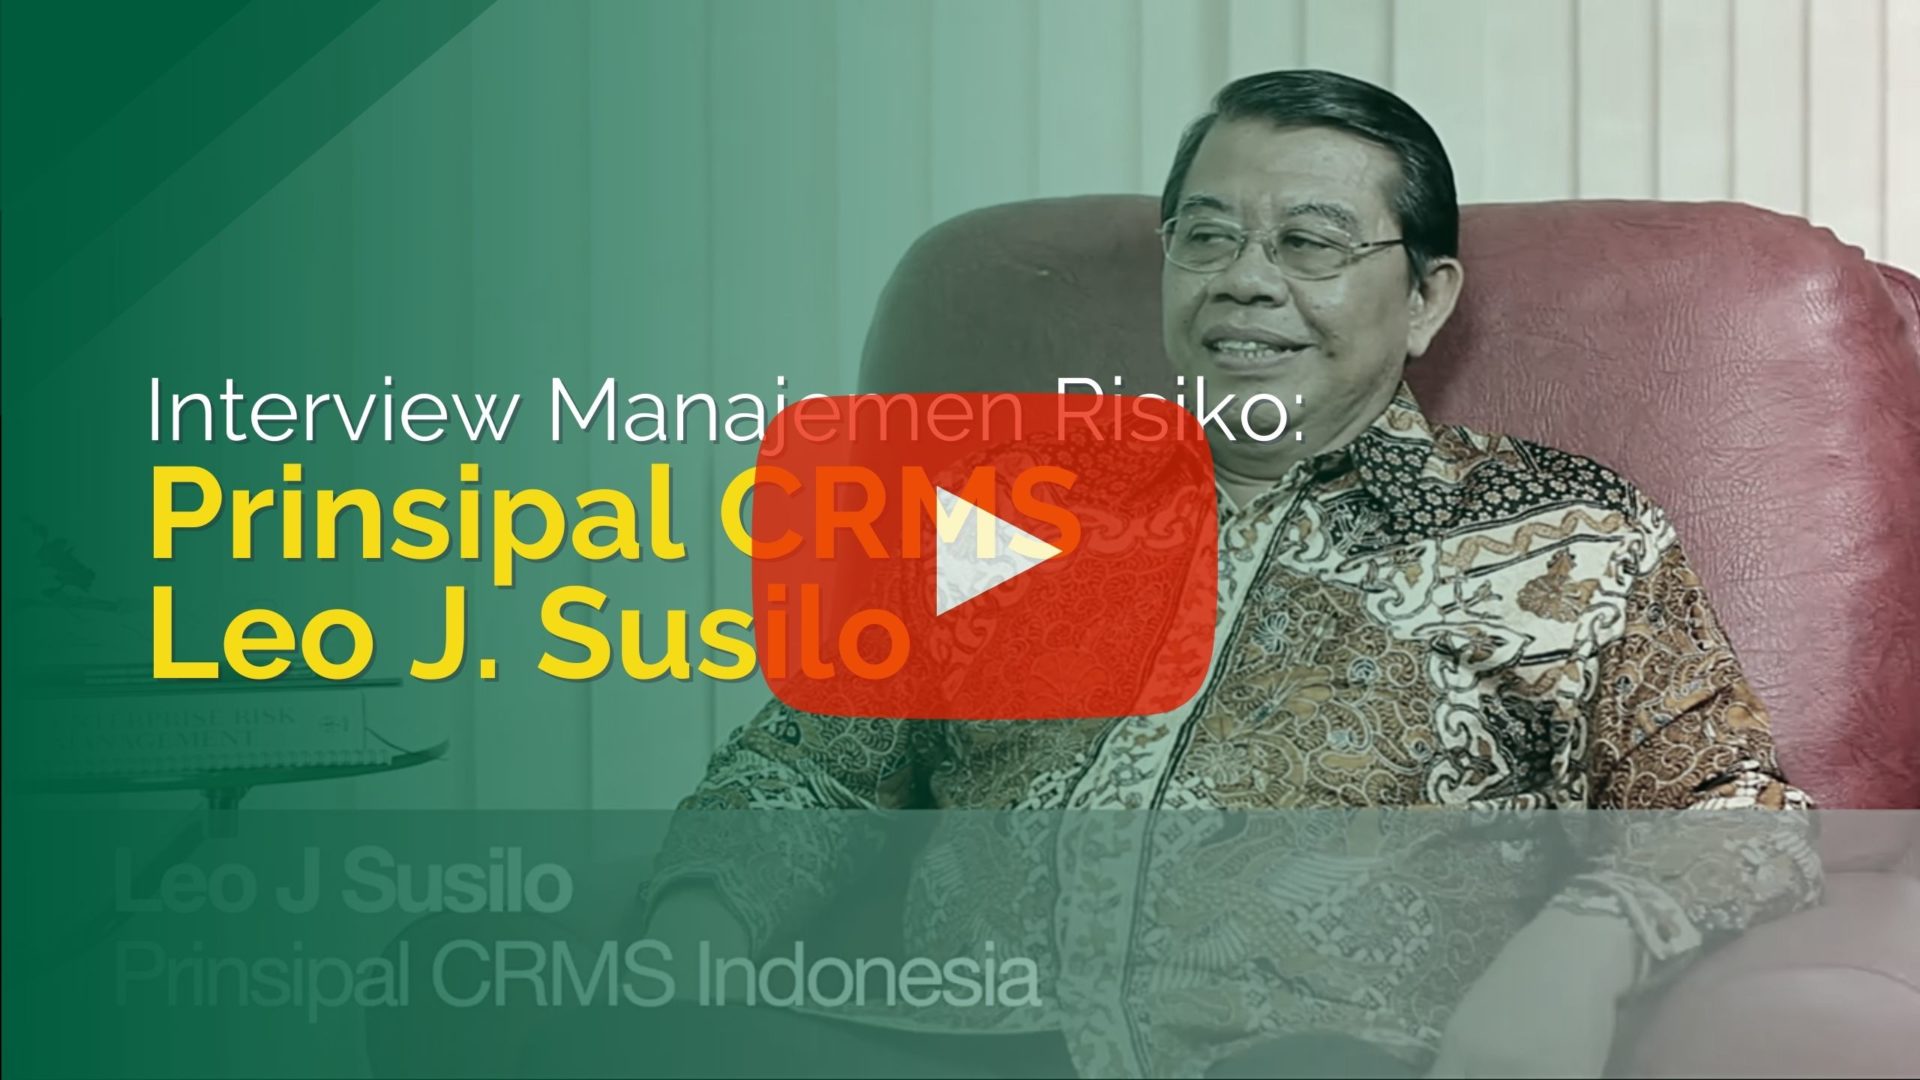 Interview Manajemen Risiko – Prinsipal CRMS Leo J. Susilo